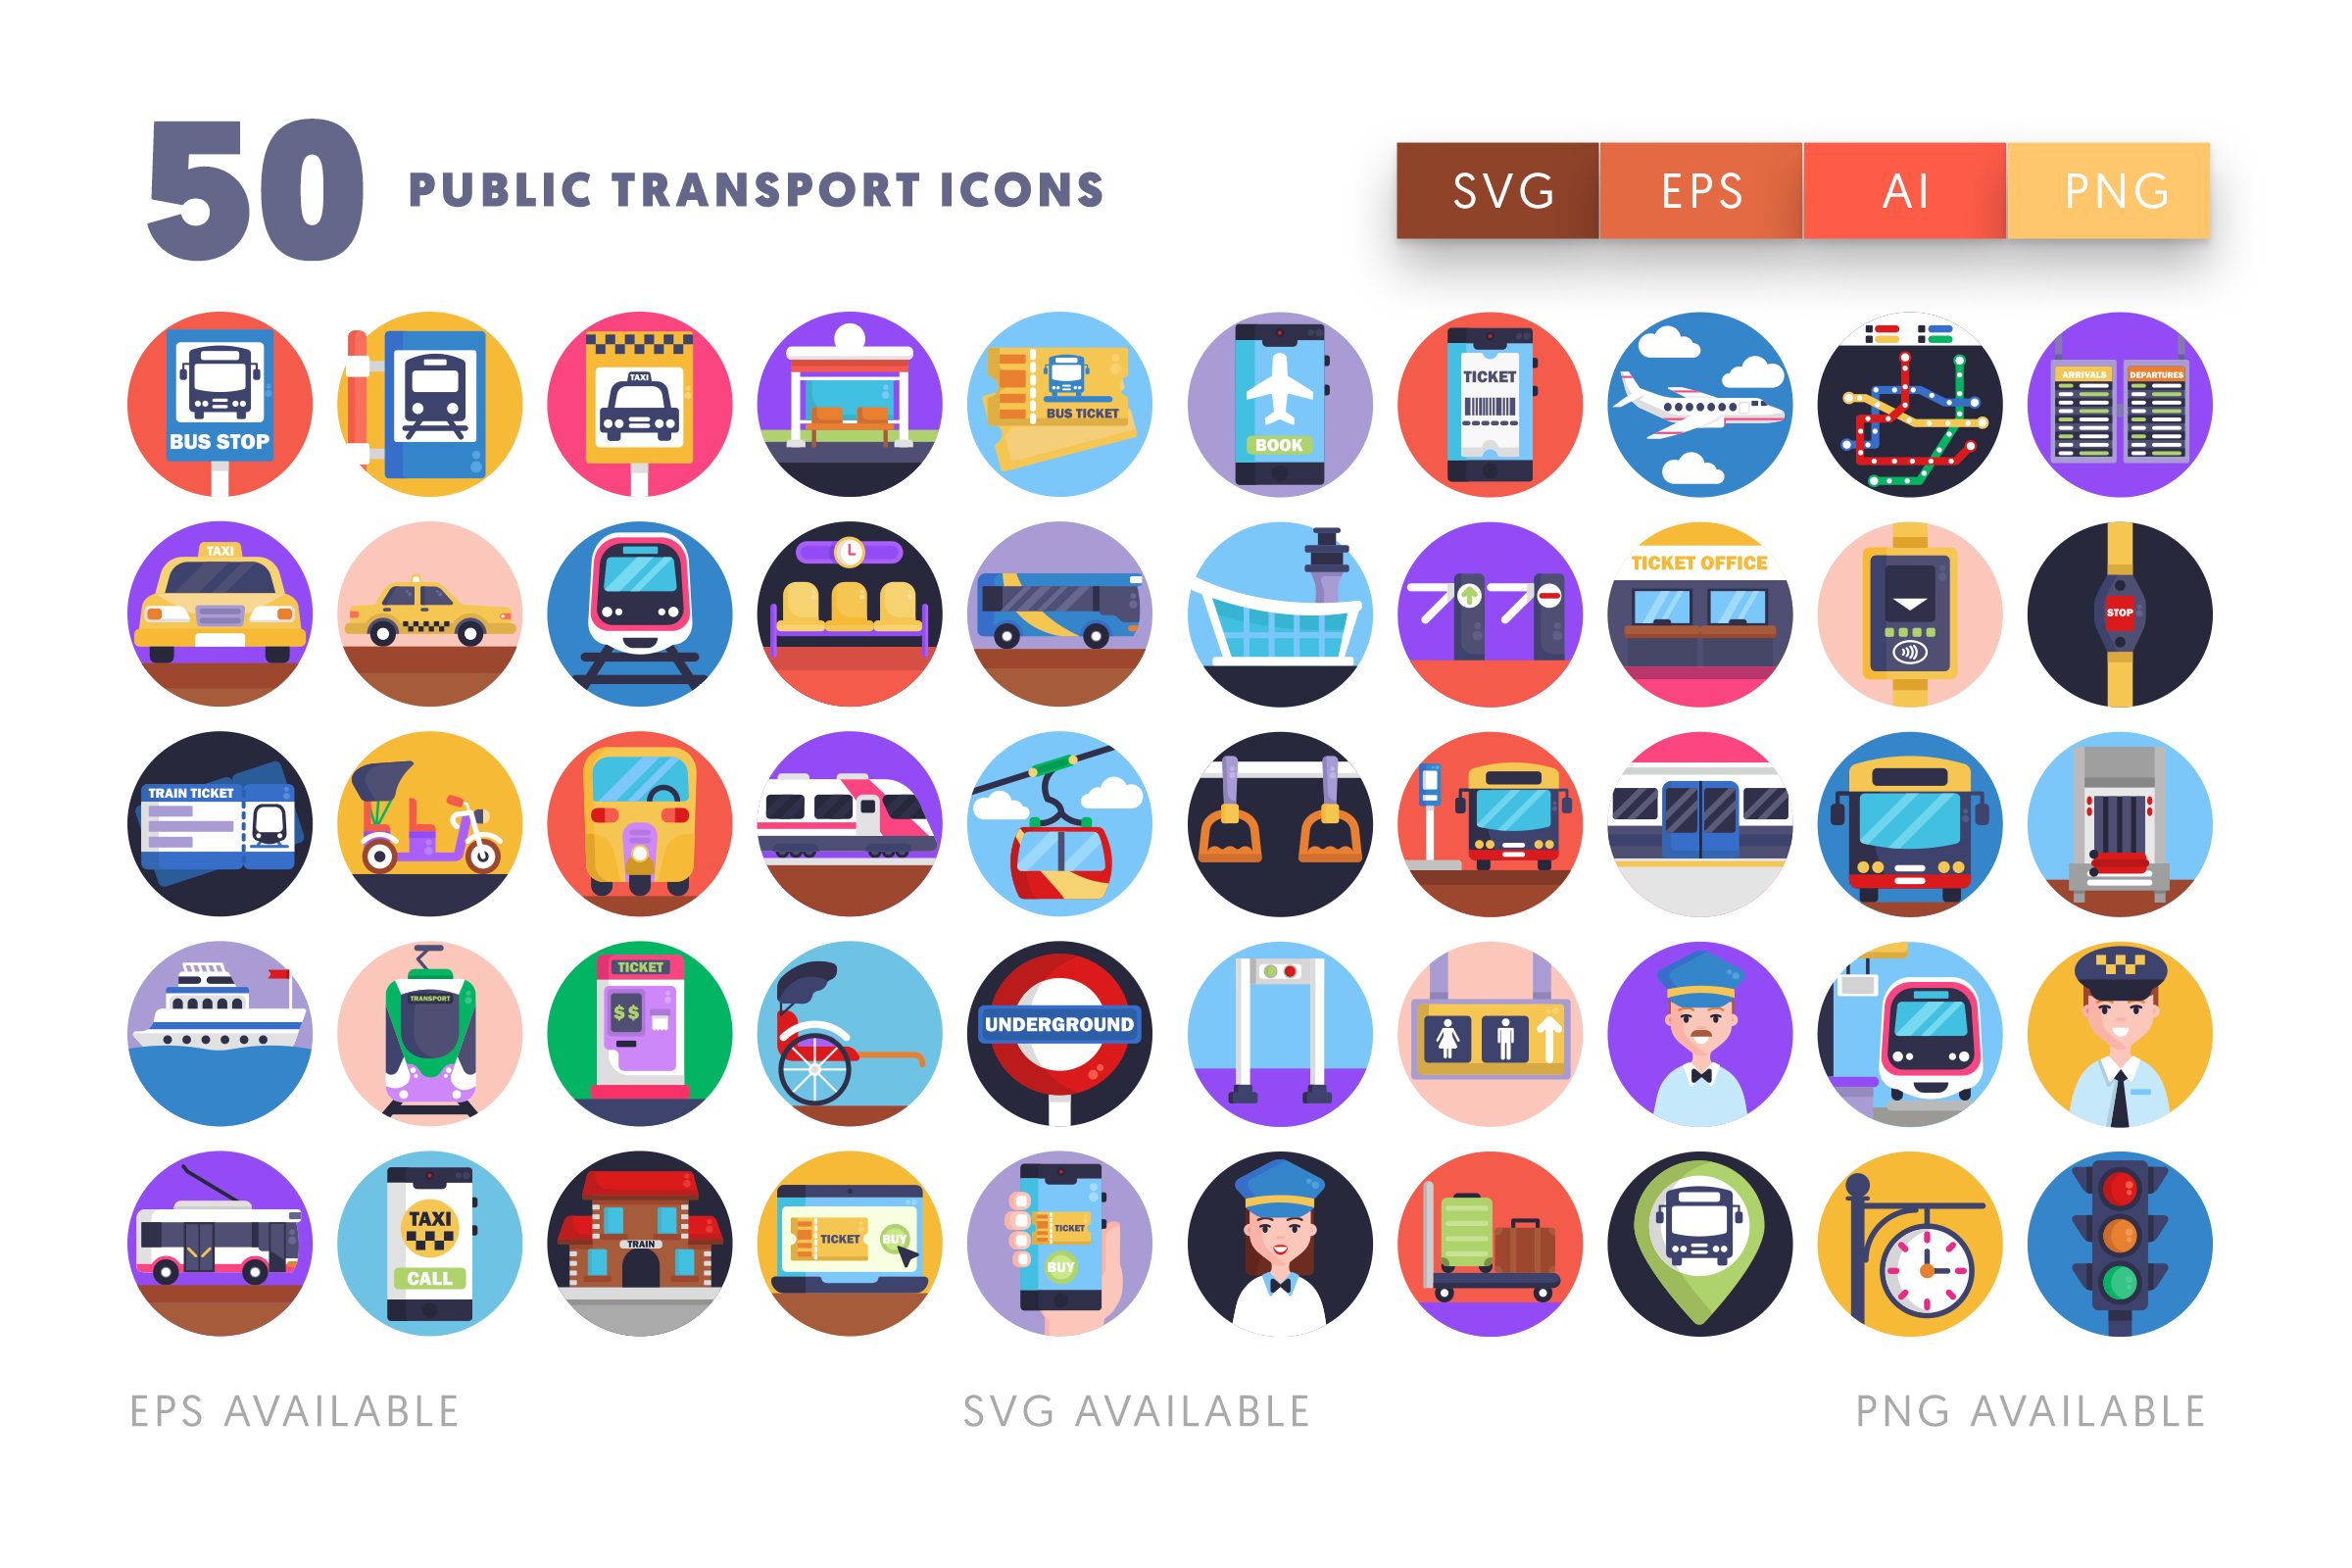 Public Transport icons png/svg/eps